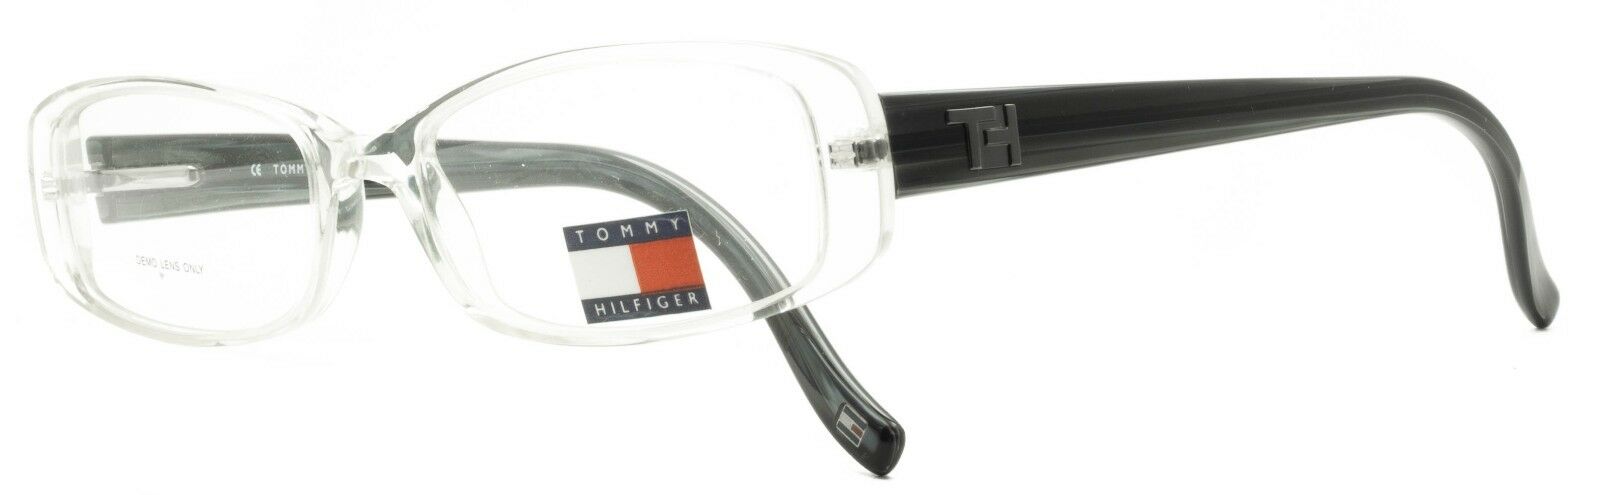 TOMMY HILFIGER TH 3080 CRY Eyewear FRAMES - NEW Glasses RX Optical Eyeglasses